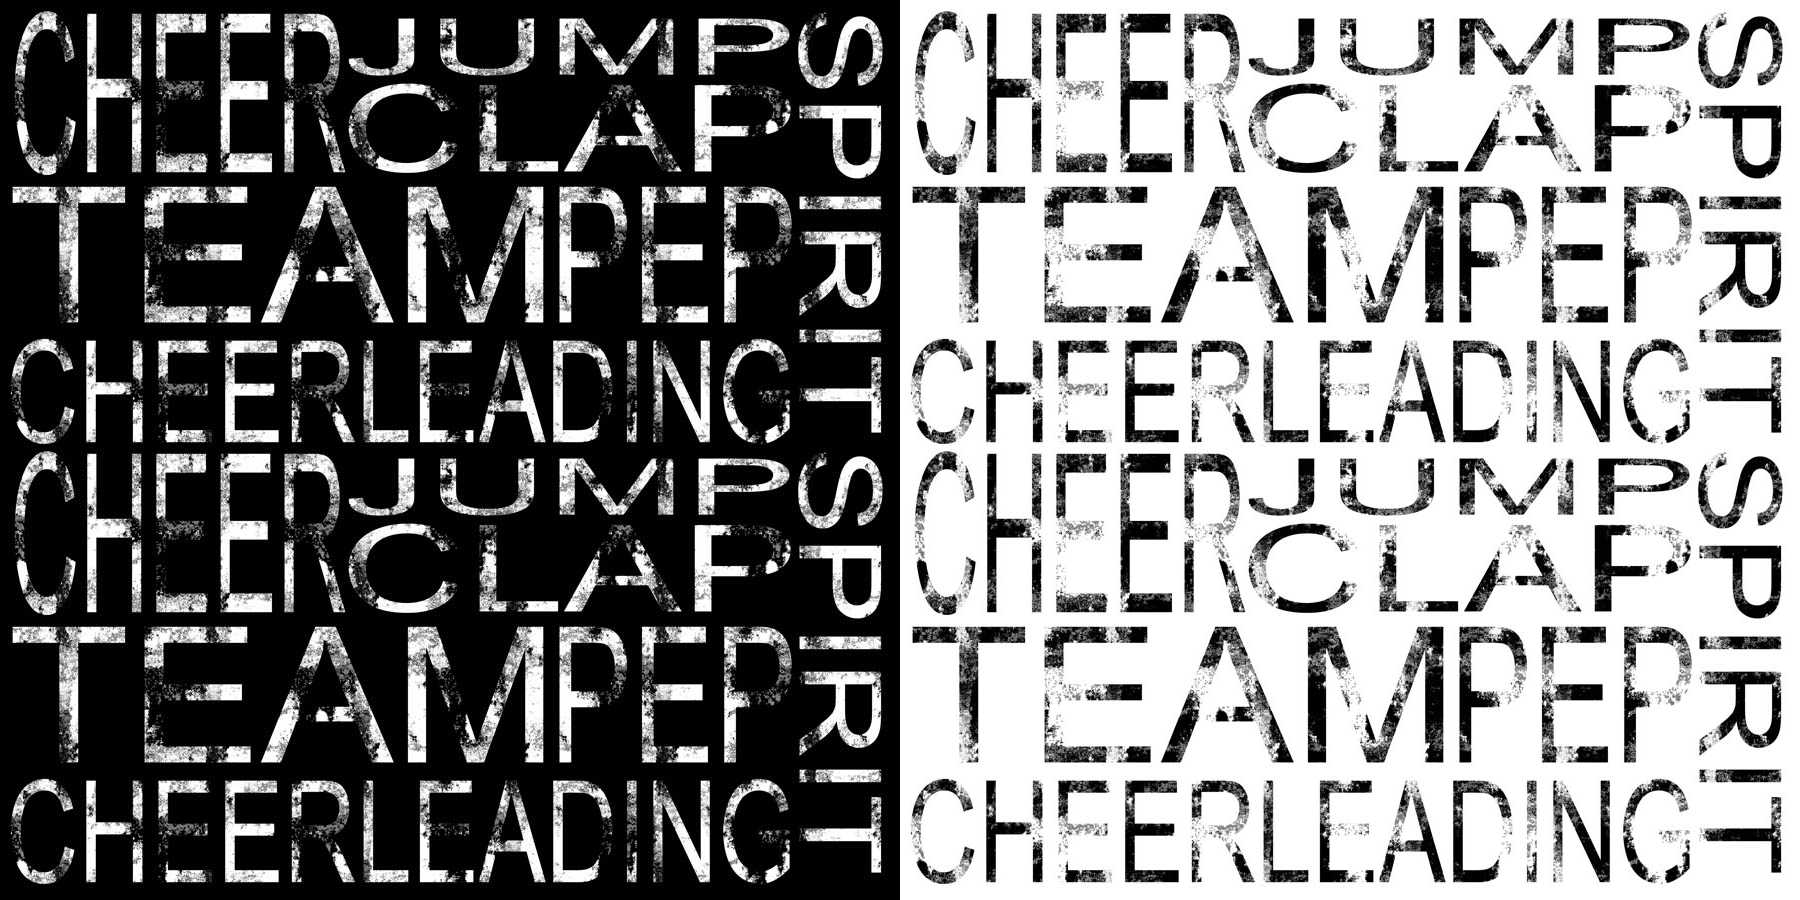 Cheerleading Paper - Talkin' Cheerleading